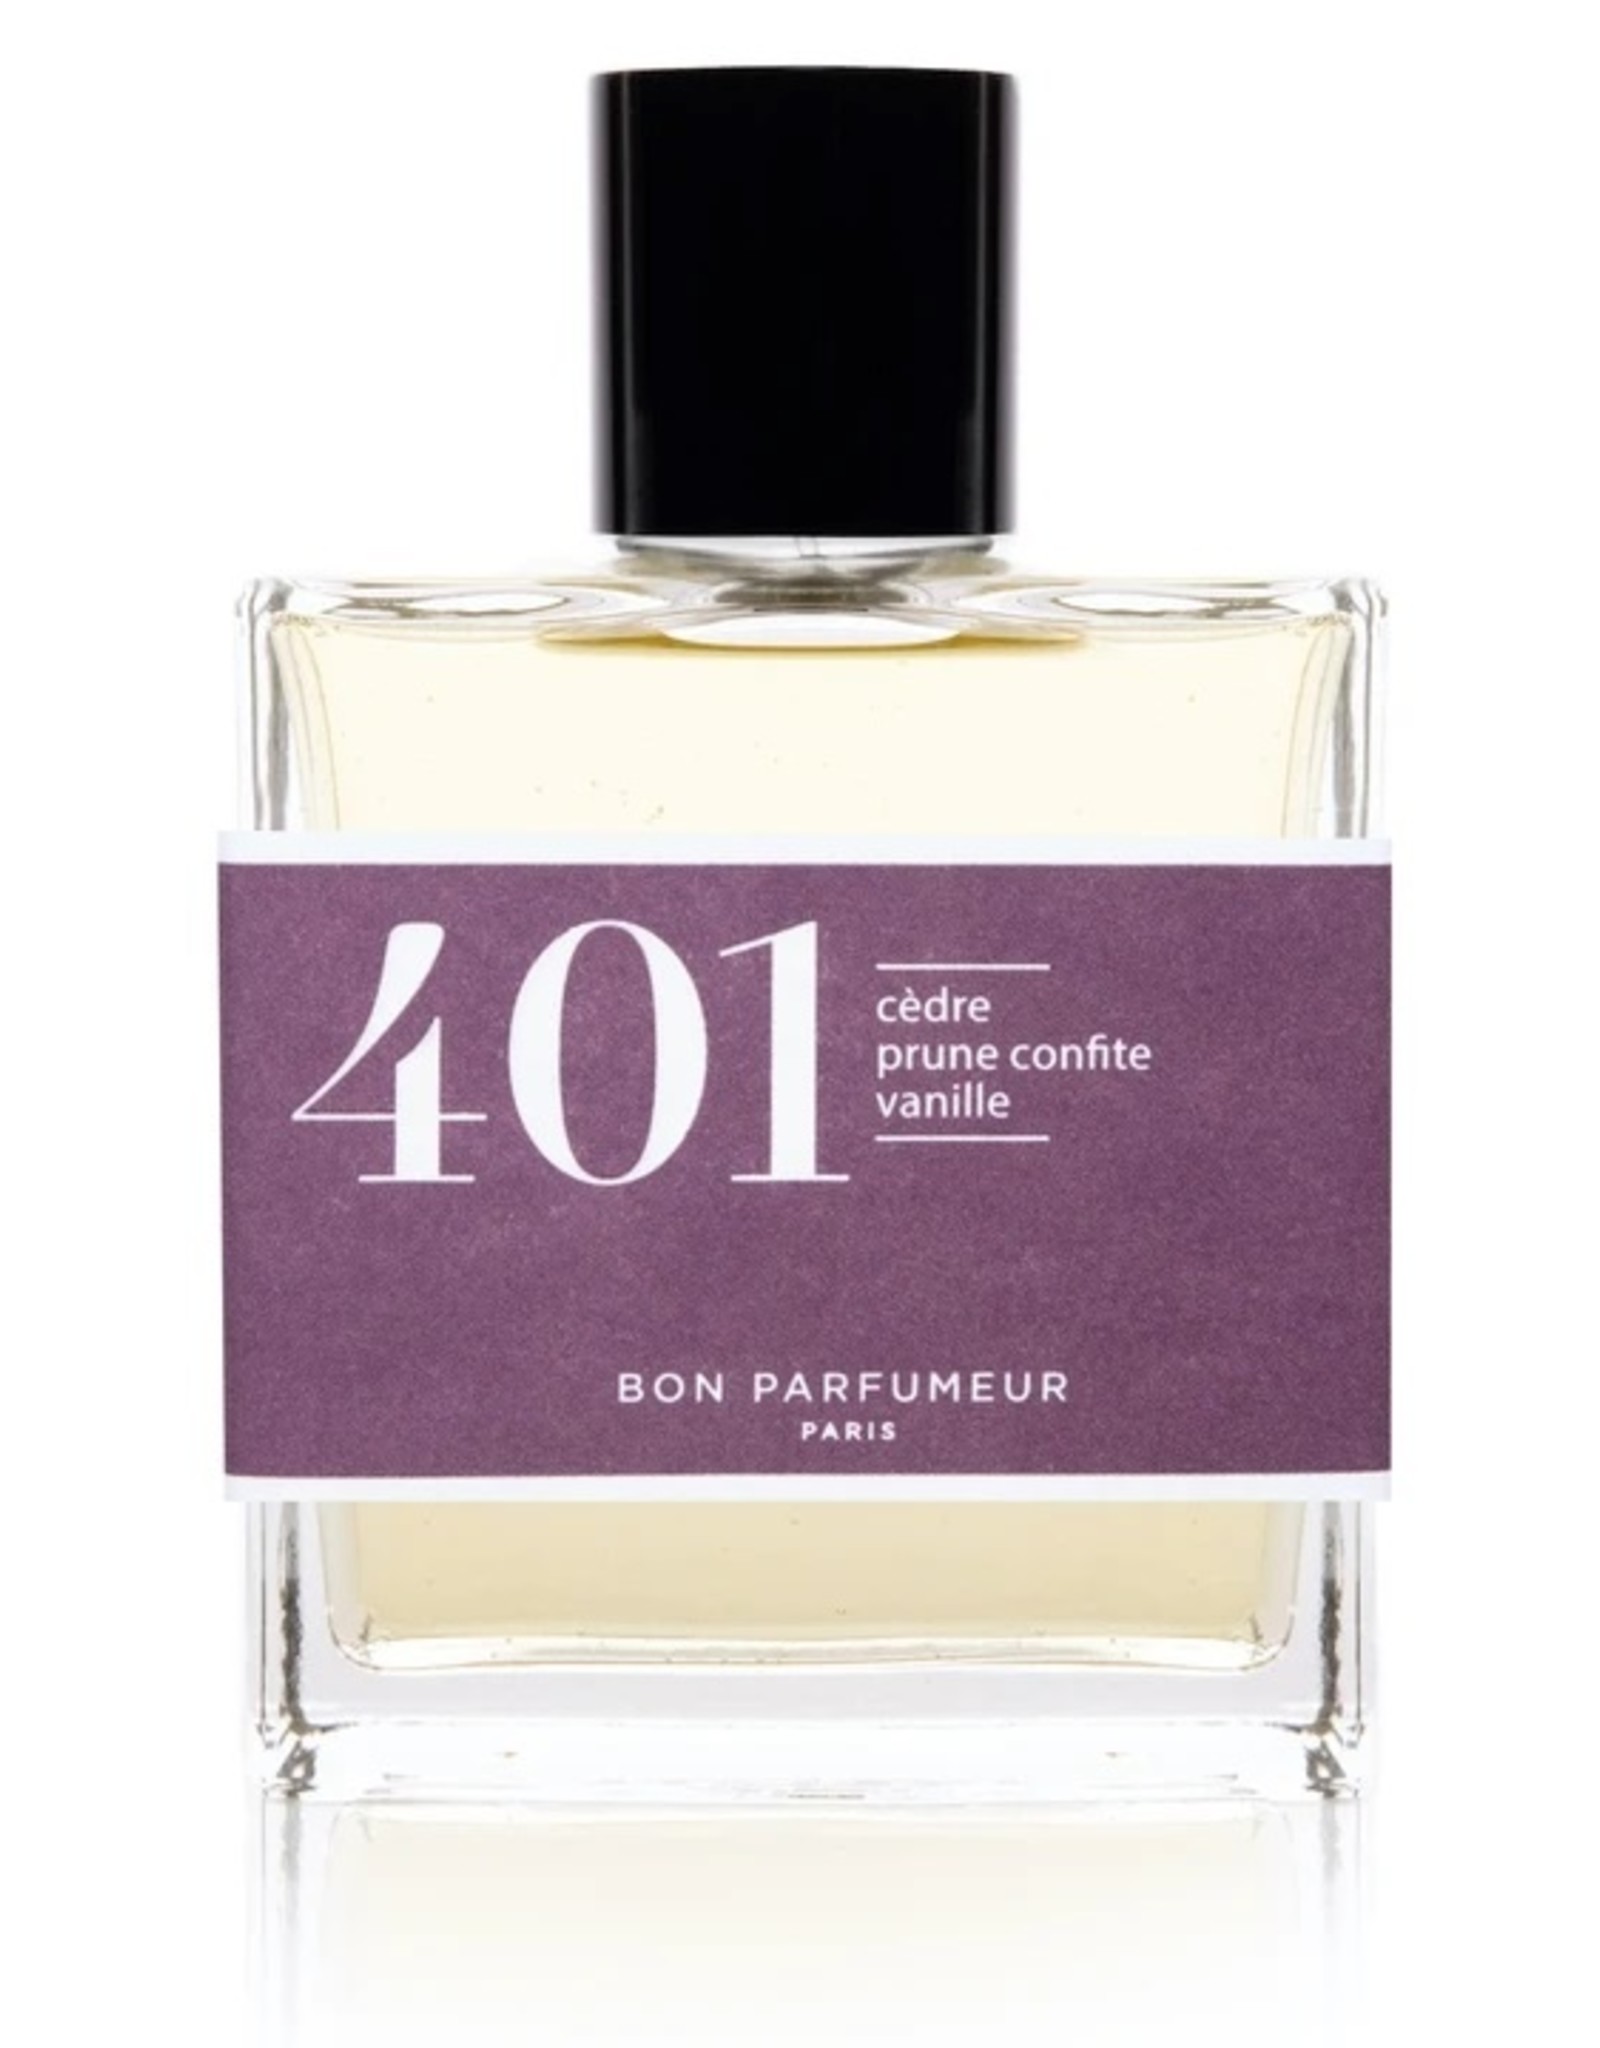 Copy of Bon Parfum 801